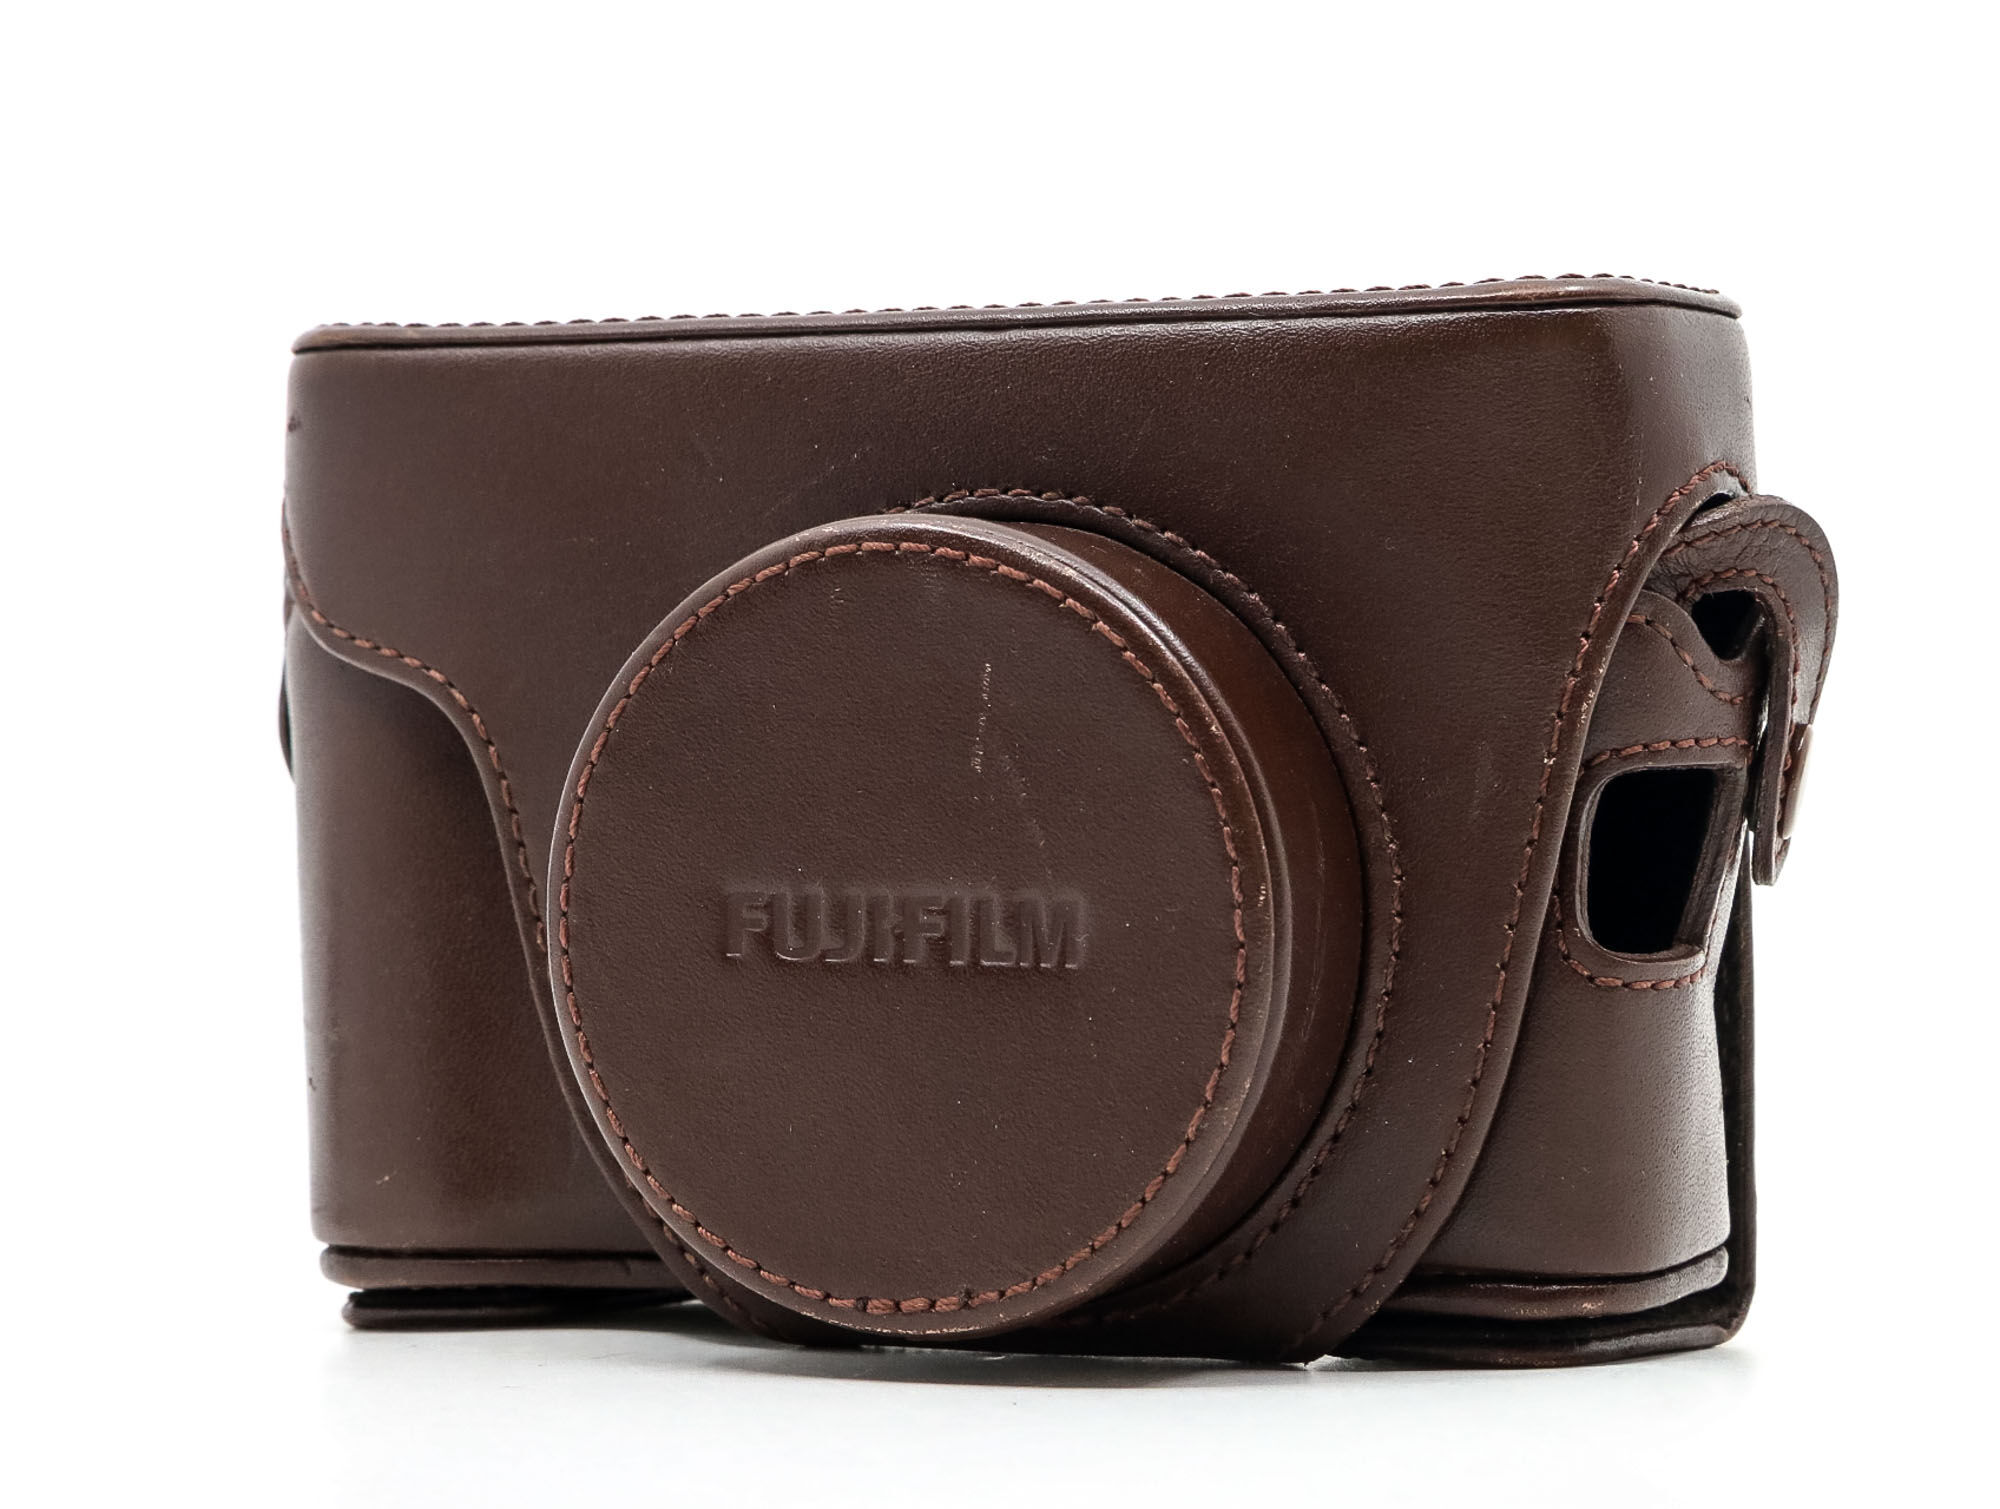 fujifilm x100 leather case (condition: excellent)